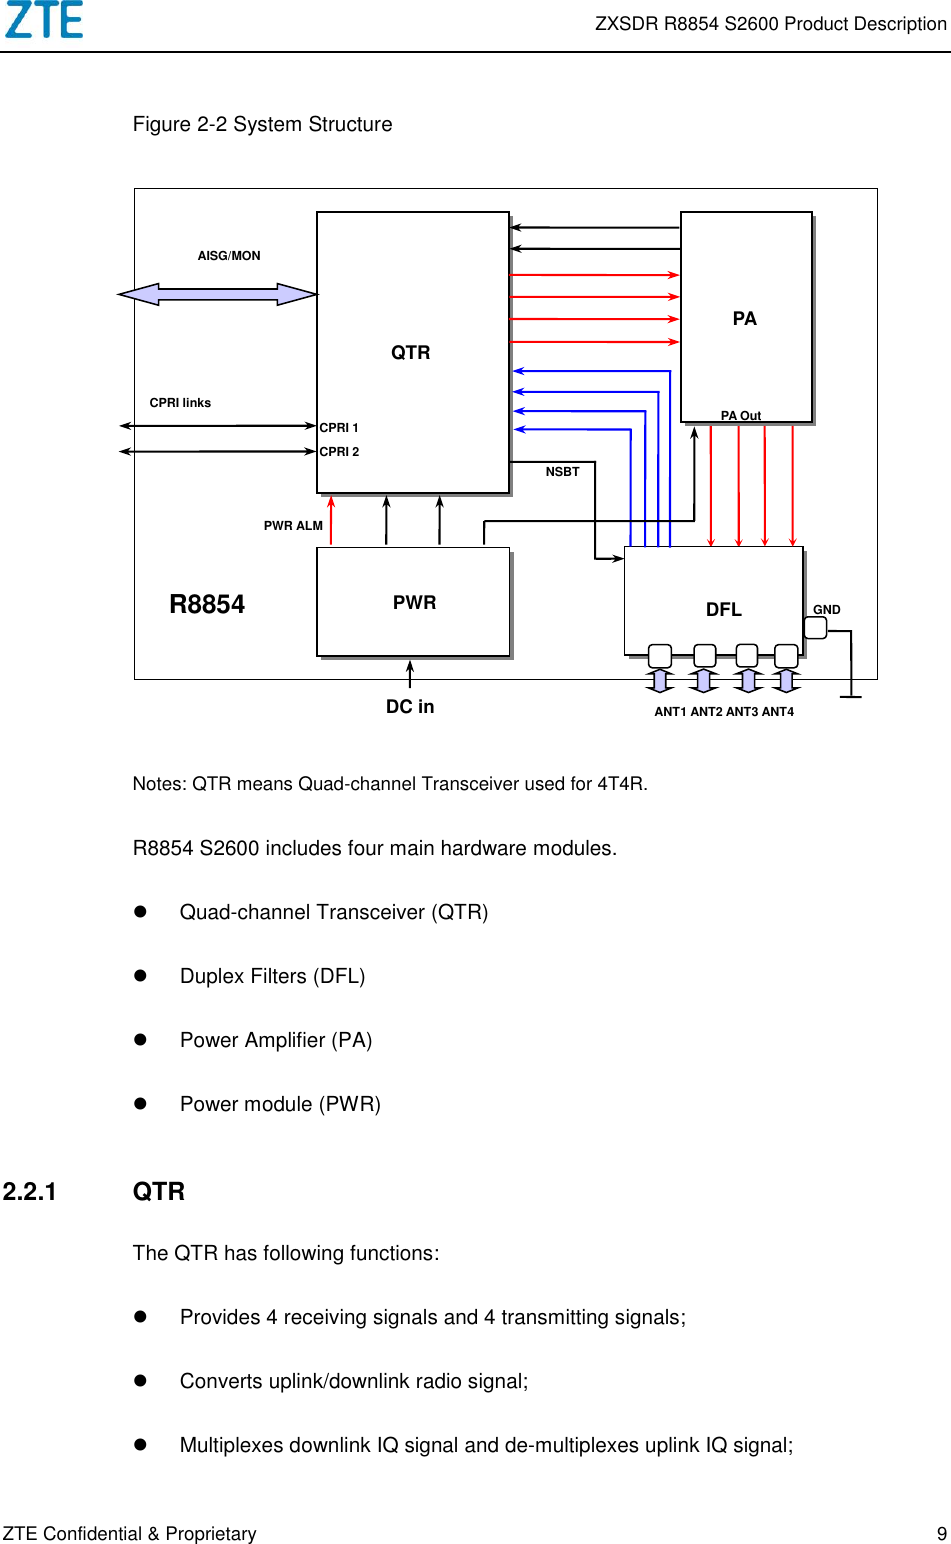 Page 11 of ZTE R8854S2600 Macro Radio Remote Unit User Manual ZXSDR R8854 S2600 Product Description